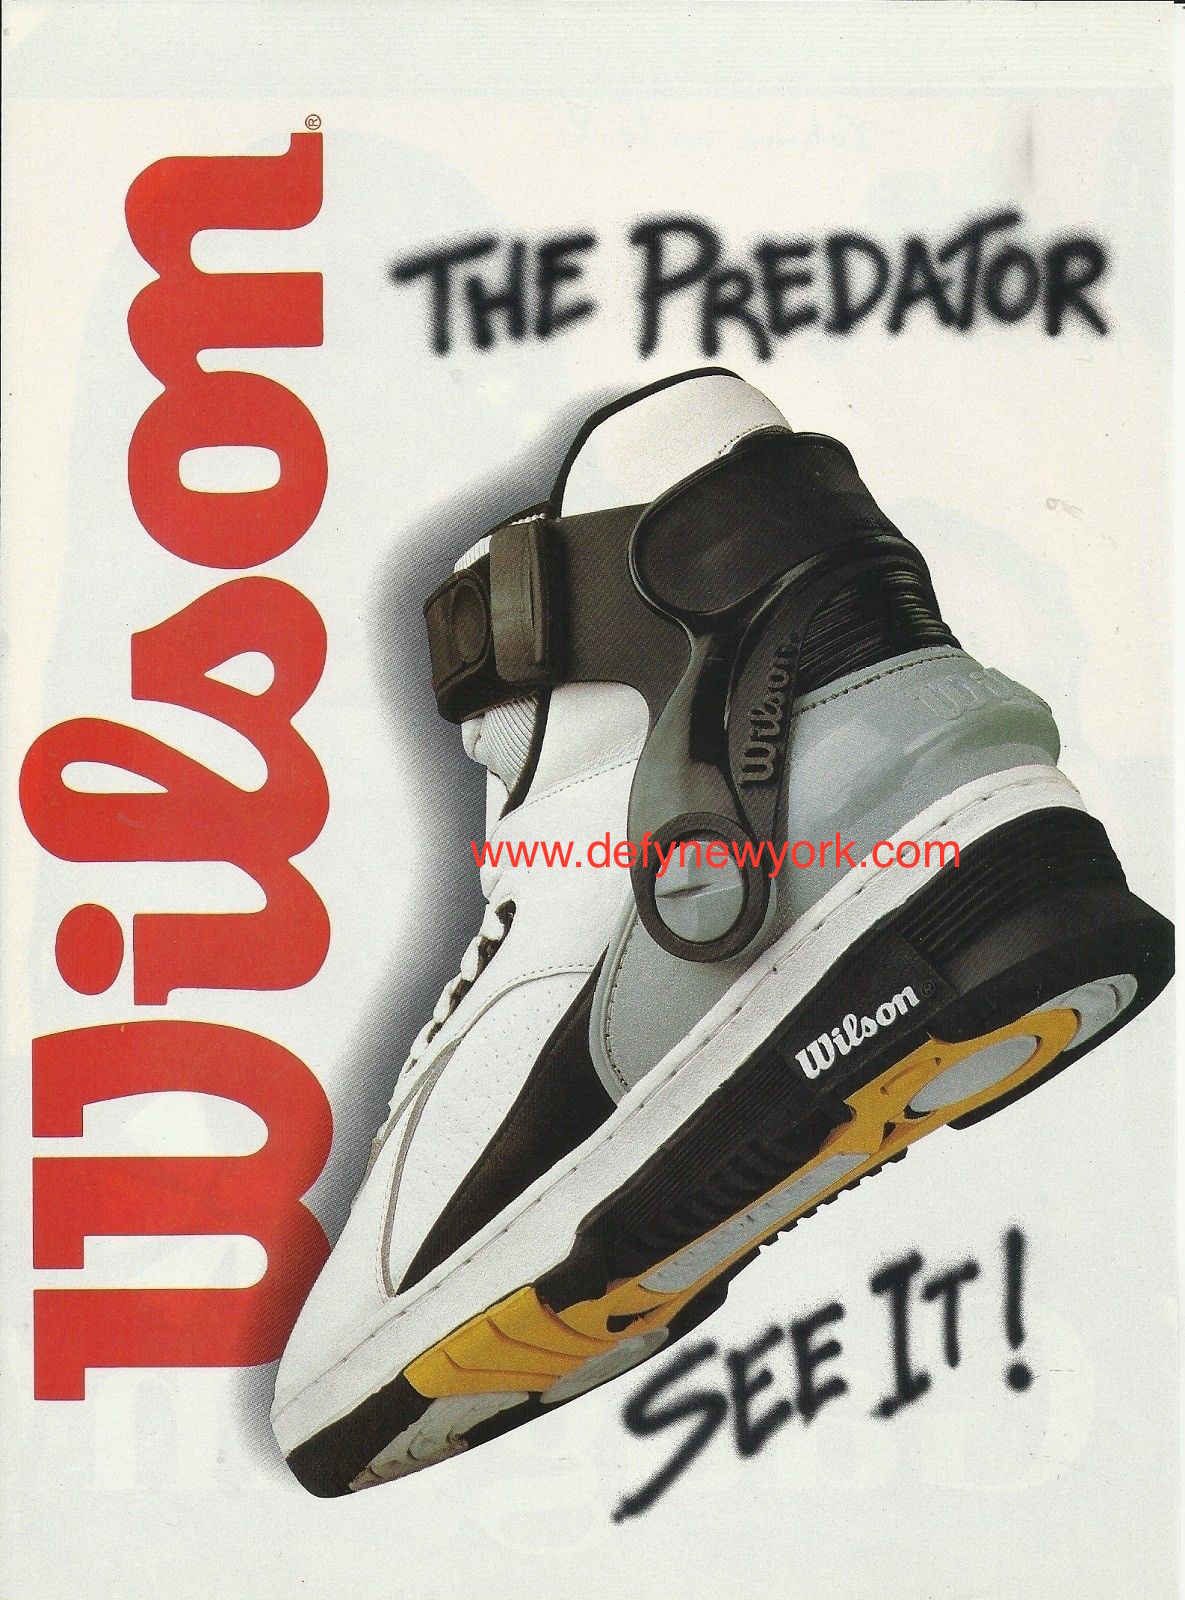 The Wilson Predator Basketball Shoe 1988